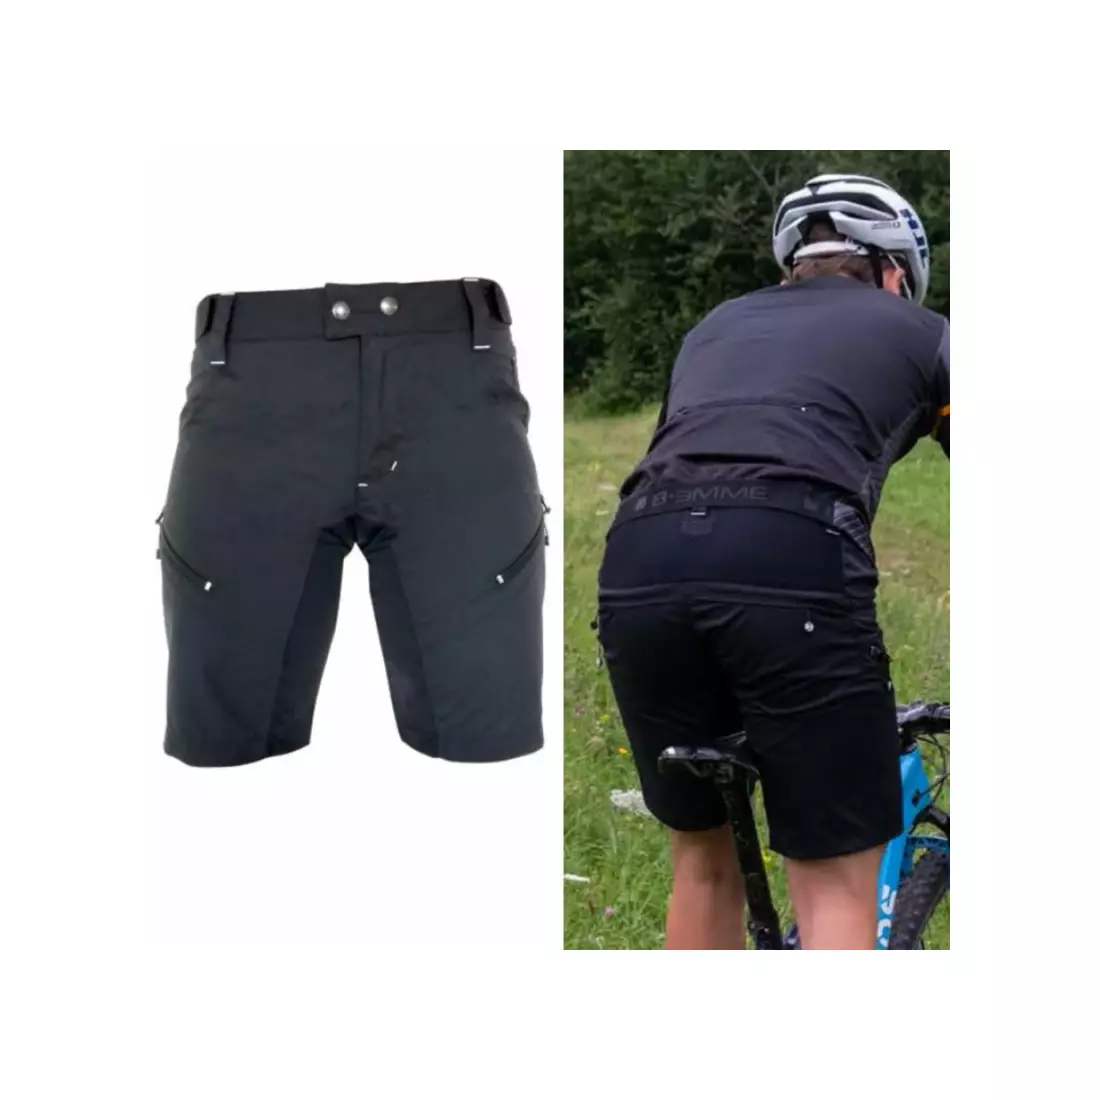 Biemme E-BIKE men's cycling shorts, black